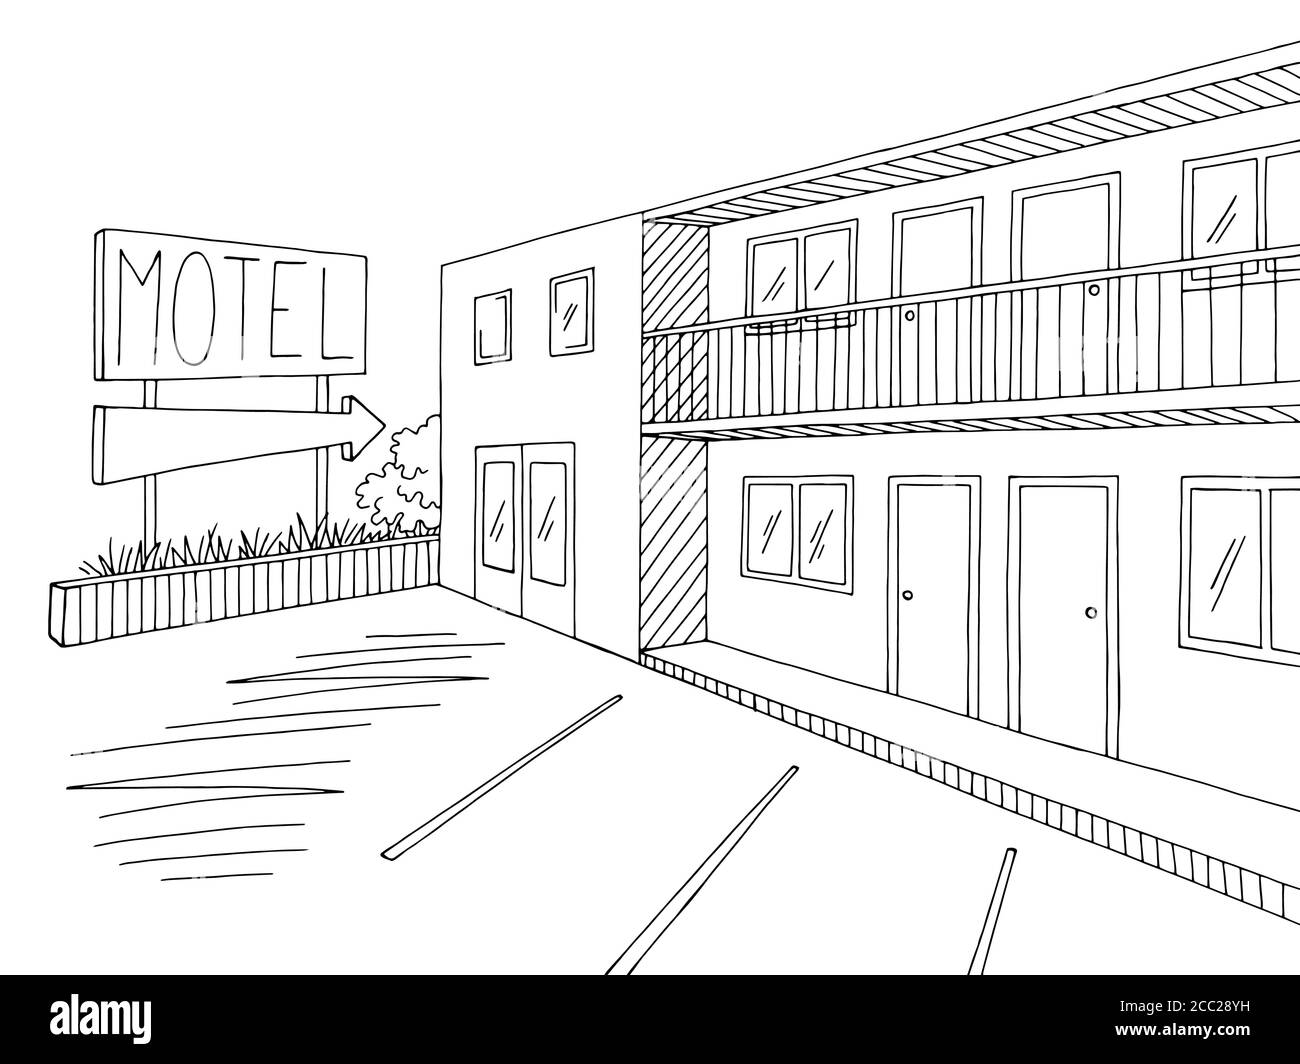 Motel außen Grafik schwarz weiß Skizze Illustration Vektor Stock Vektor